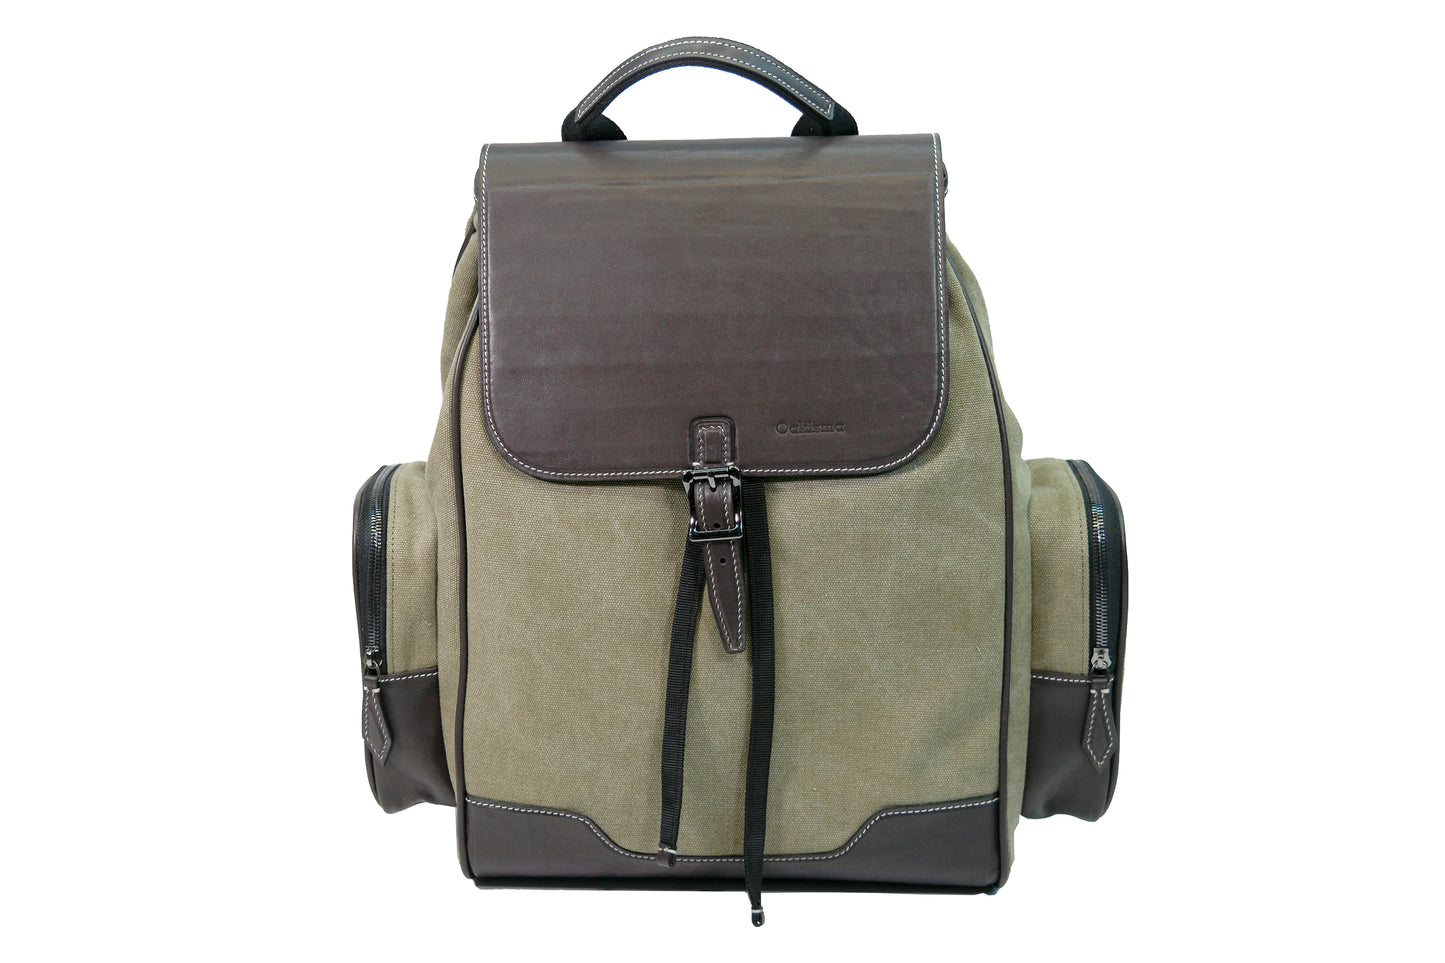 [Bag Pattern]Making leather backpacks, making canvas leather bags, classic leather backpacks